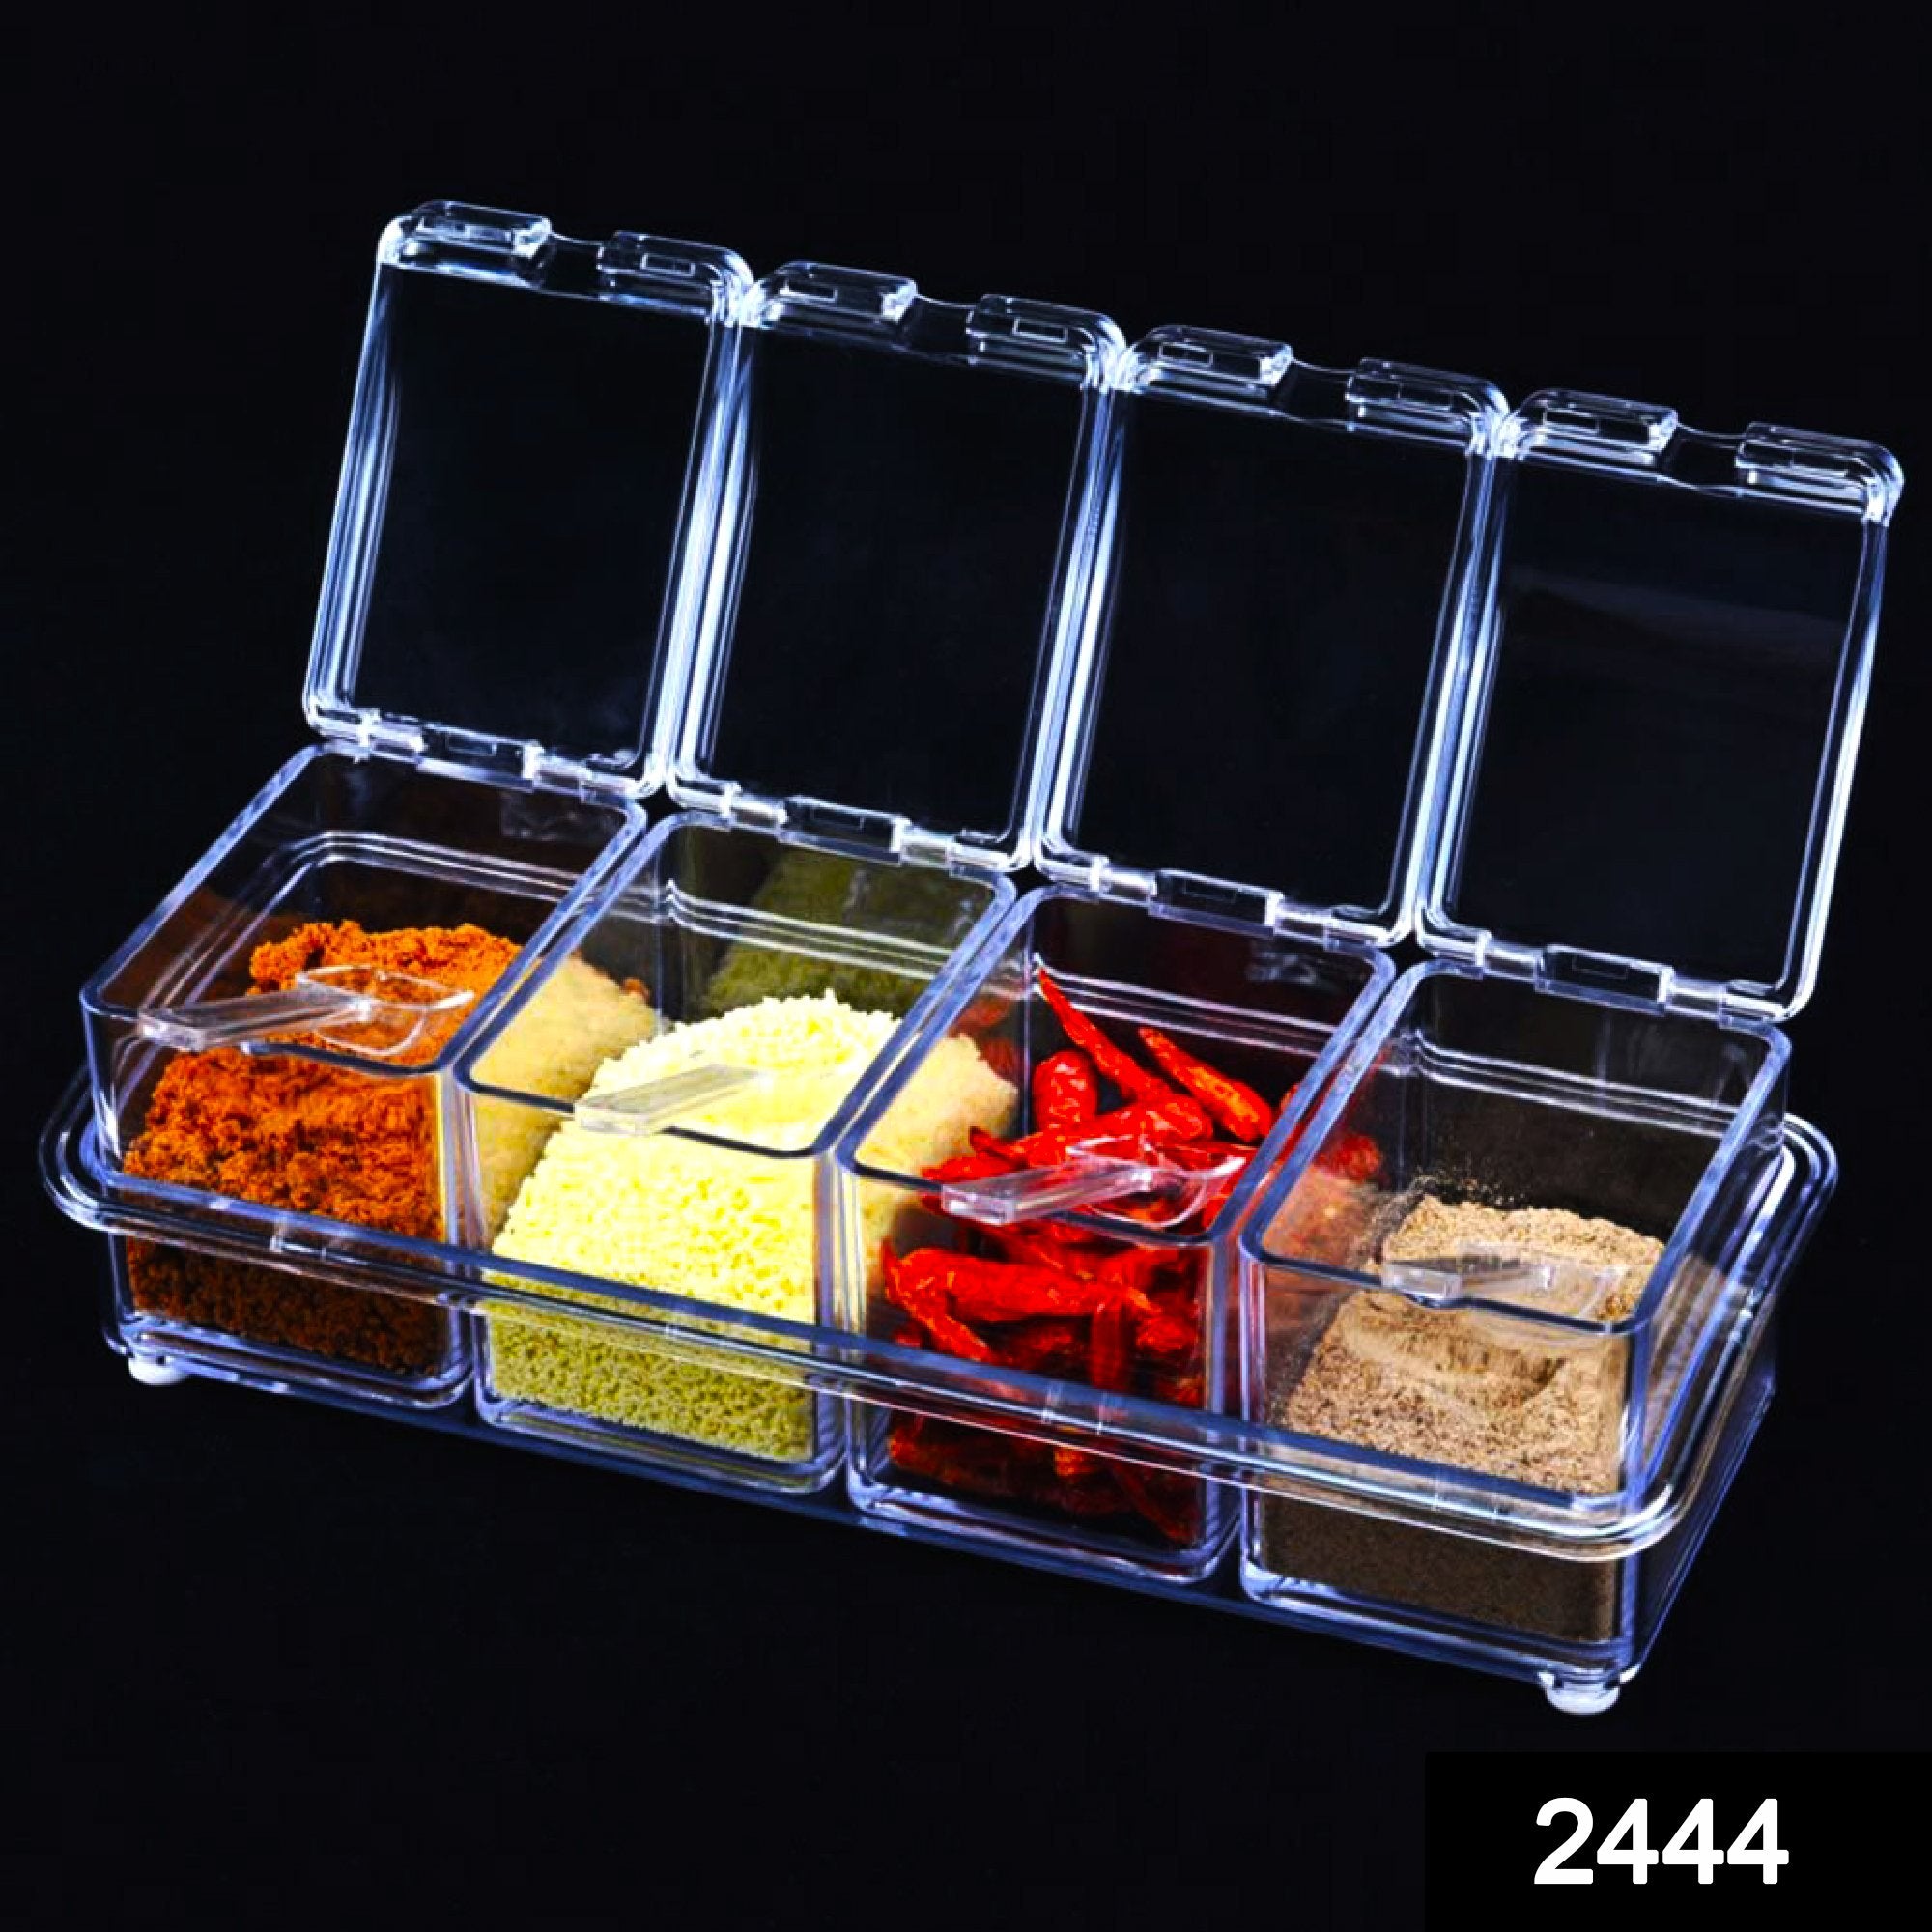 2444 Crystal Seasoning Acrylic Box Pepper Salt Spice Rack - SkyShopy